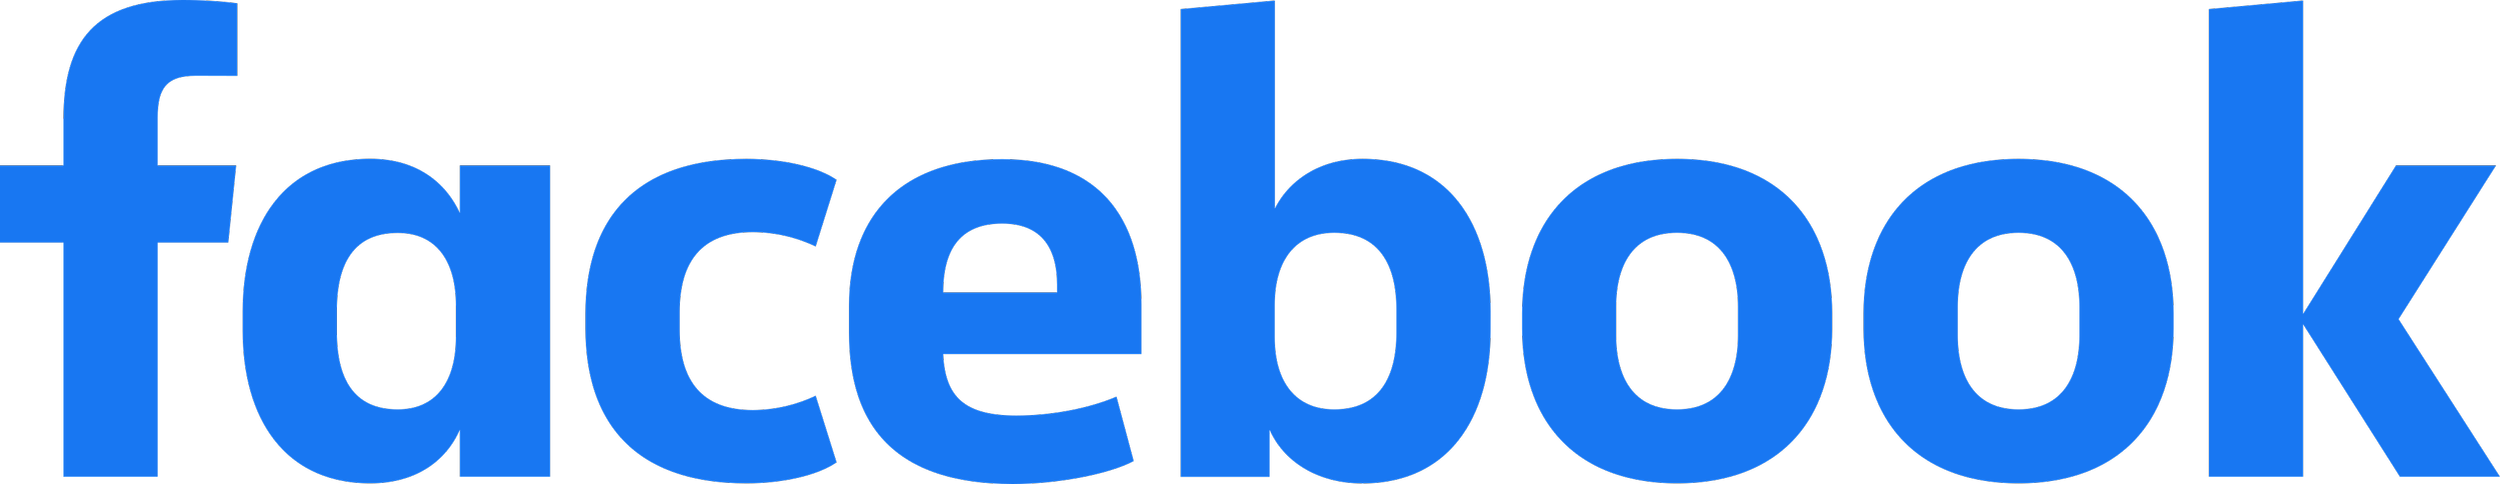 facebook-logo-15.png